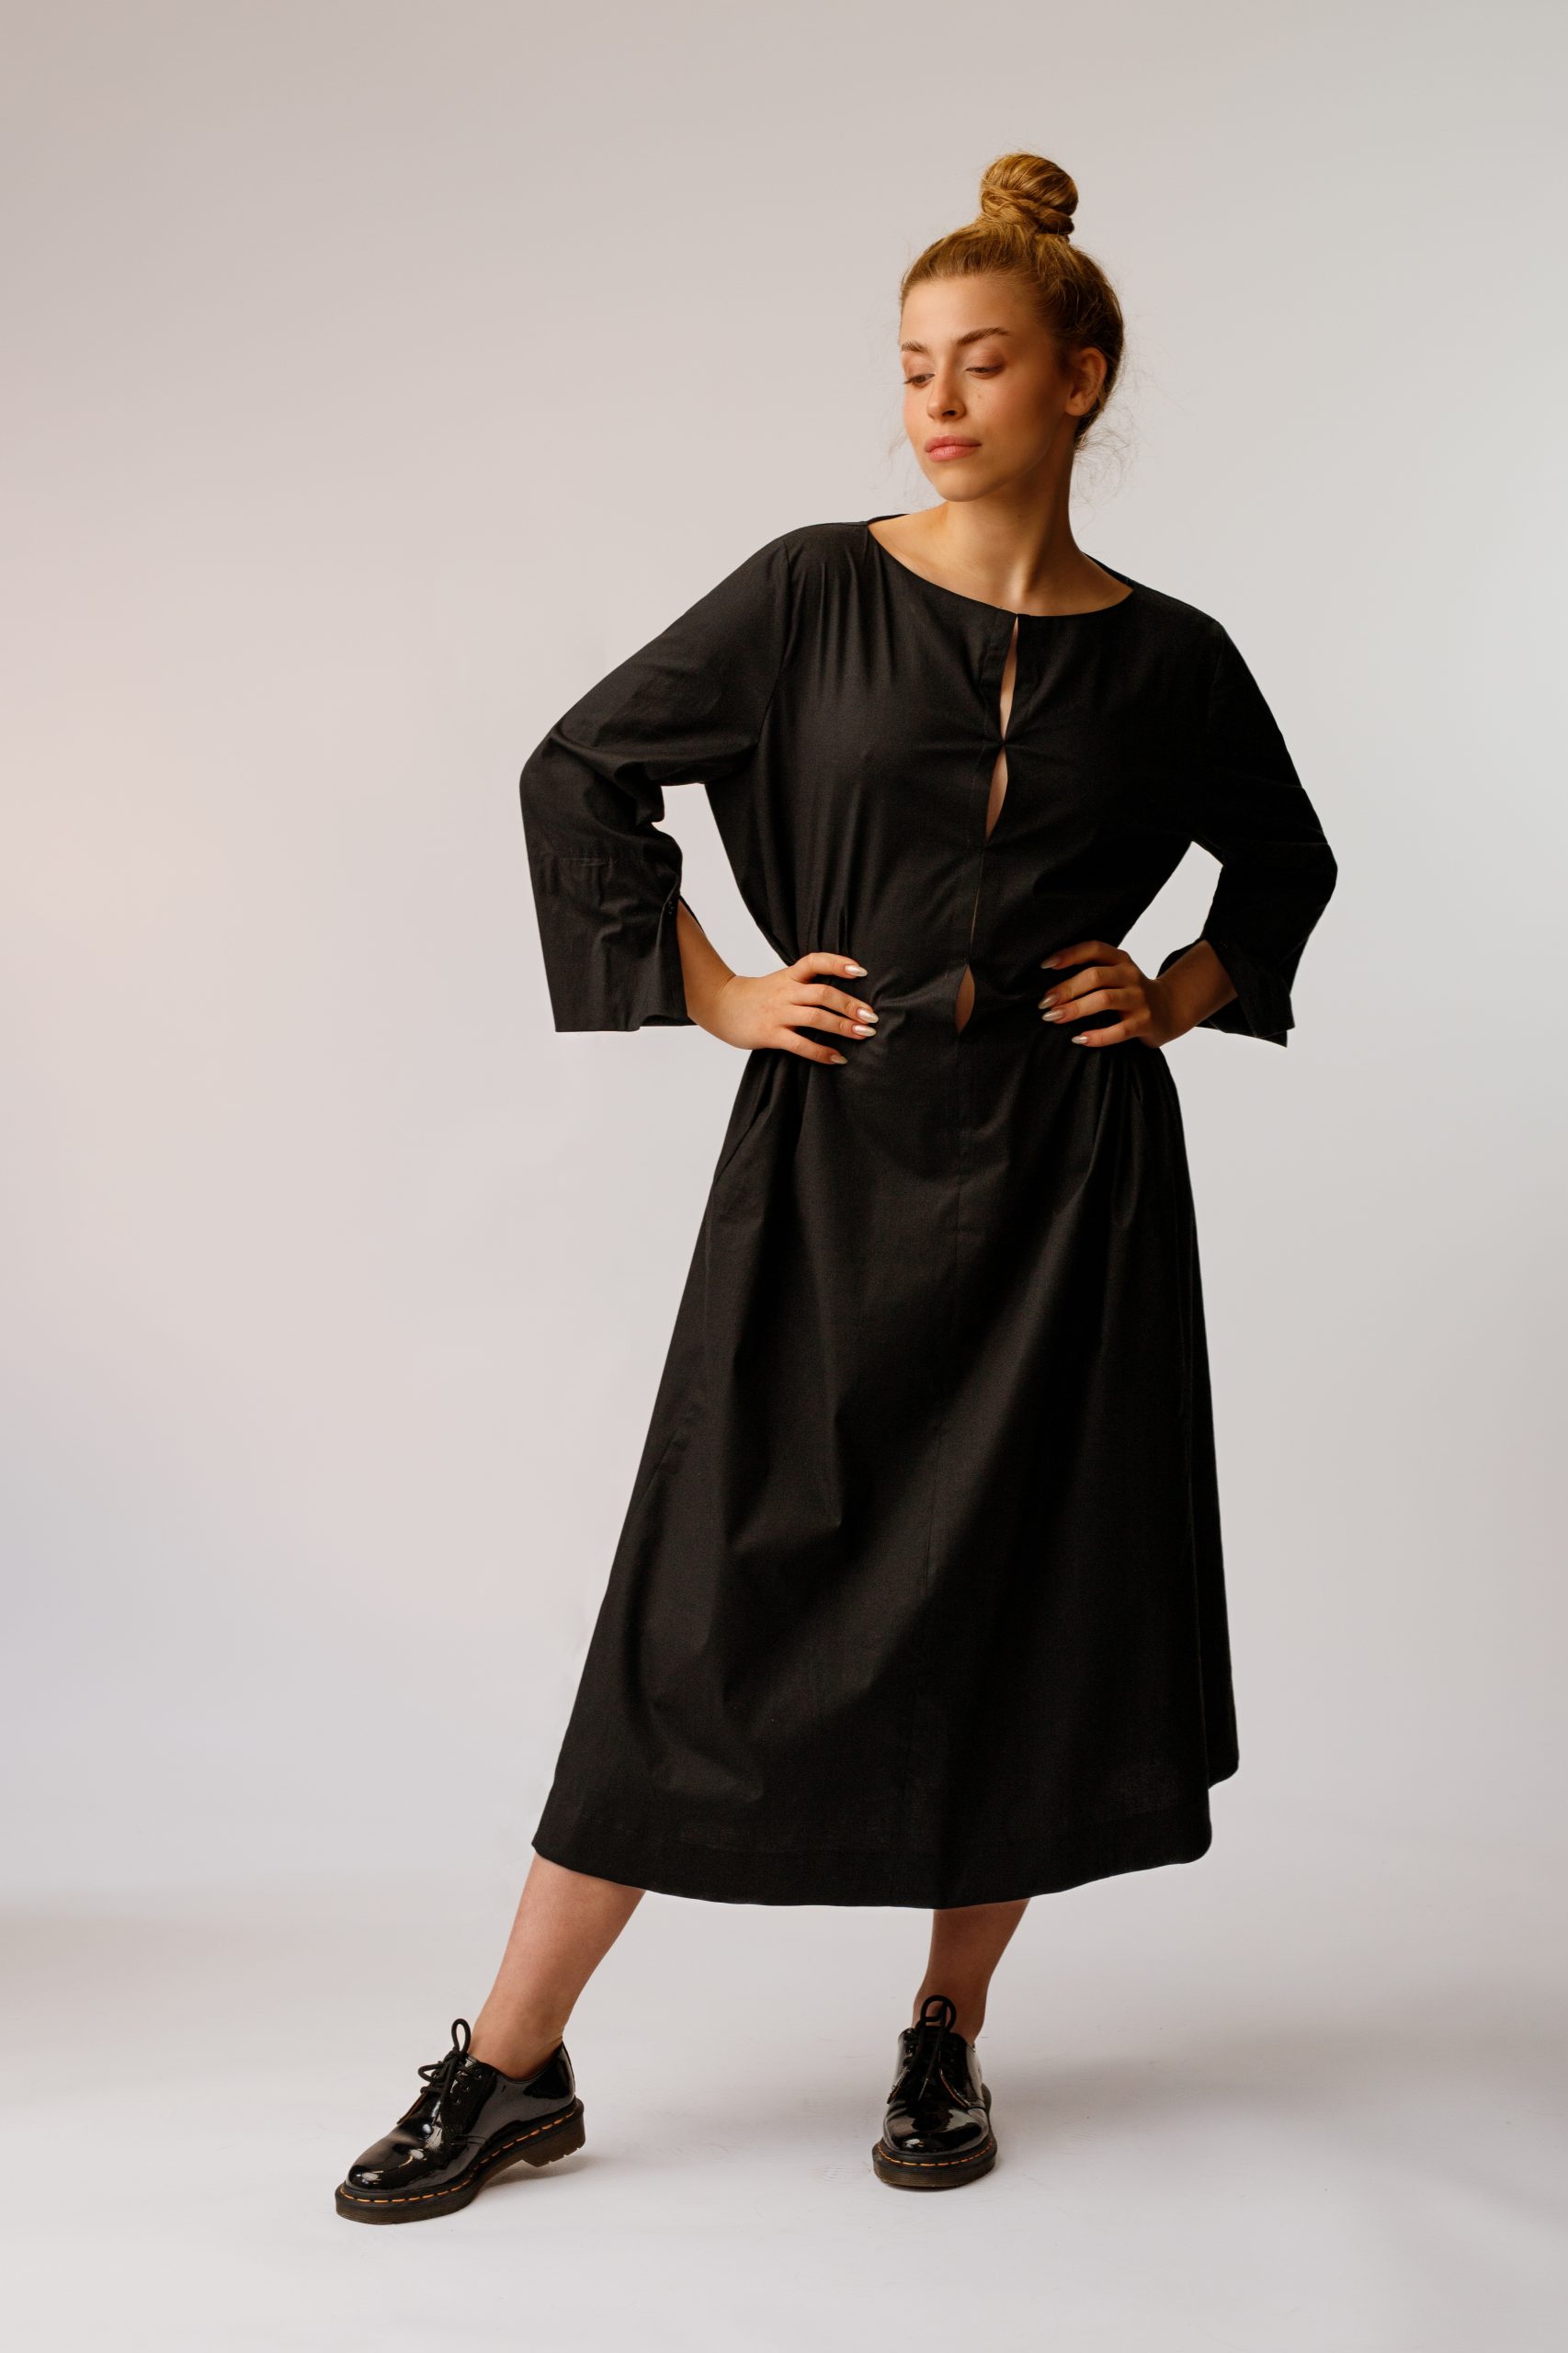 Moda Autorska Slow Fashion BezAle - bezale sukienka subtelna harmonia B scaled 1